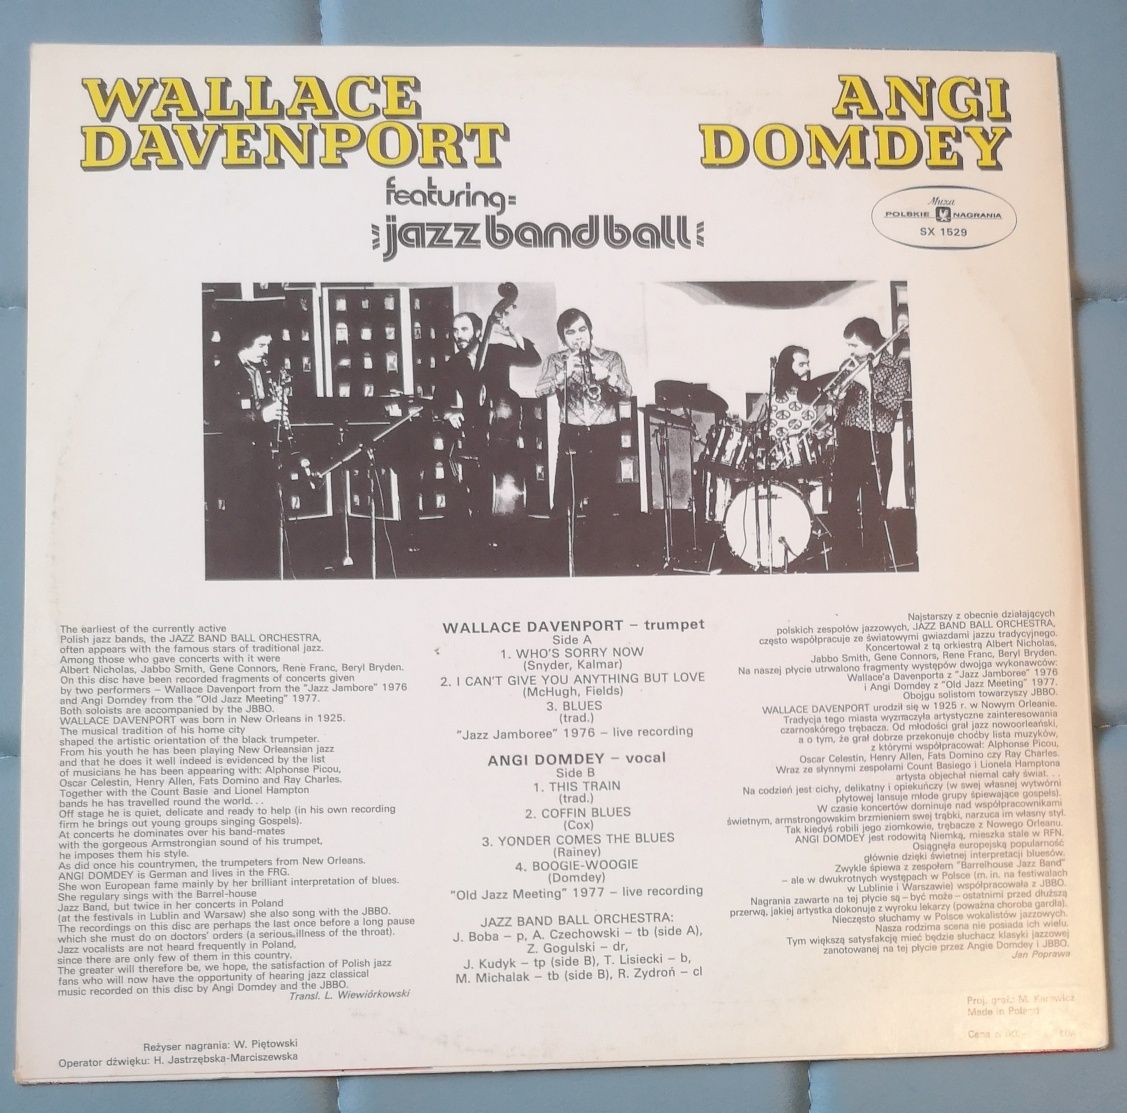 W. Davenport, A. Domdey ft. Jazzbandball